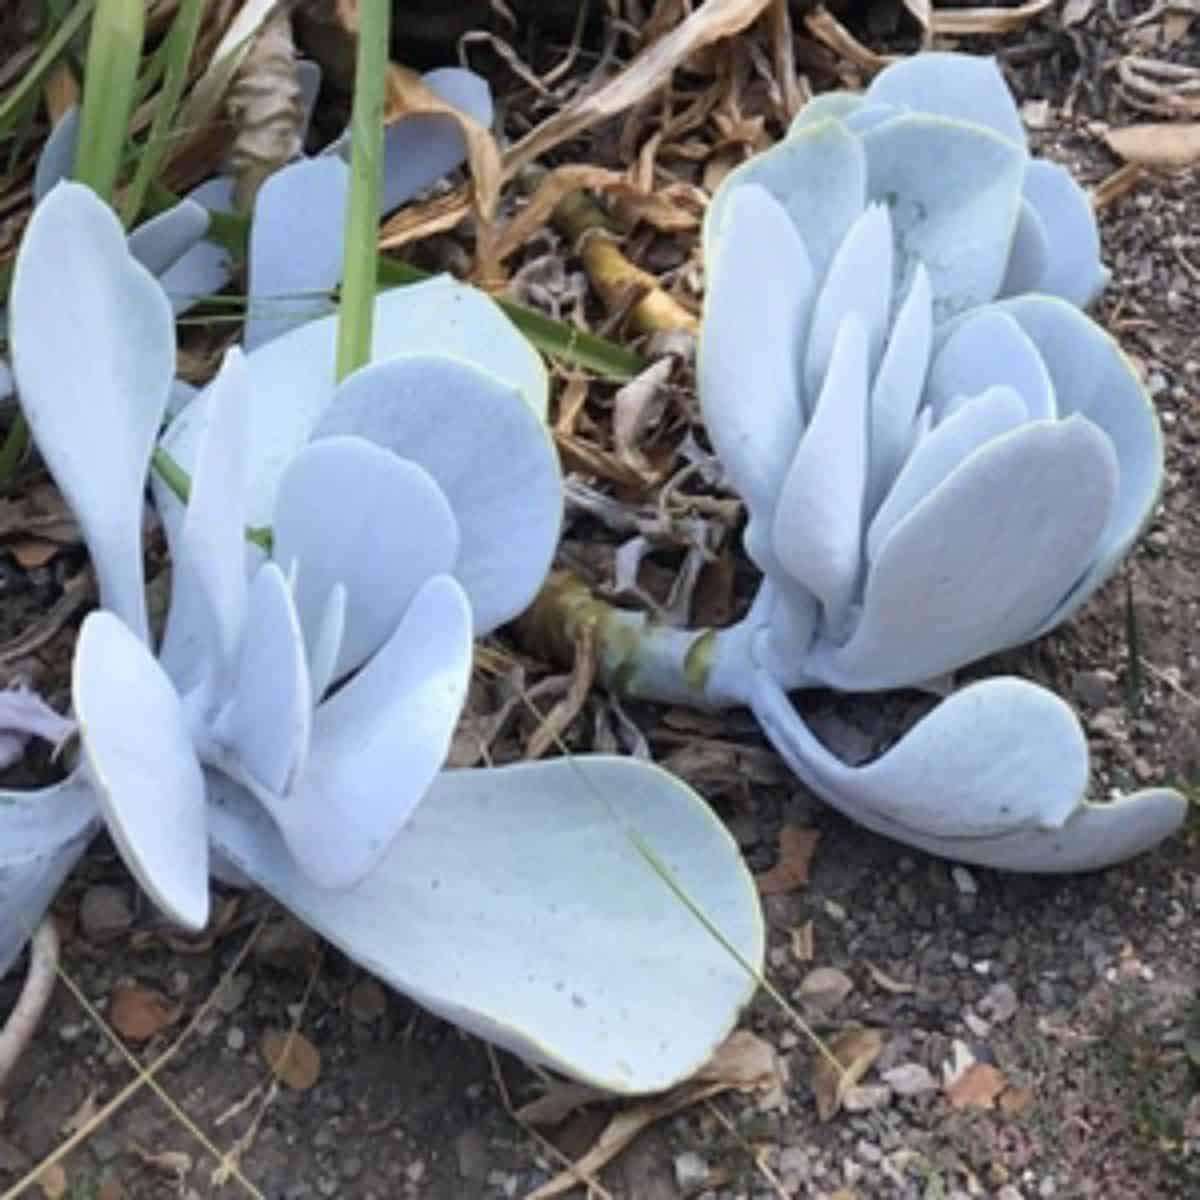 Cotyledon orbiculata 'White Platter' grows outdoor.